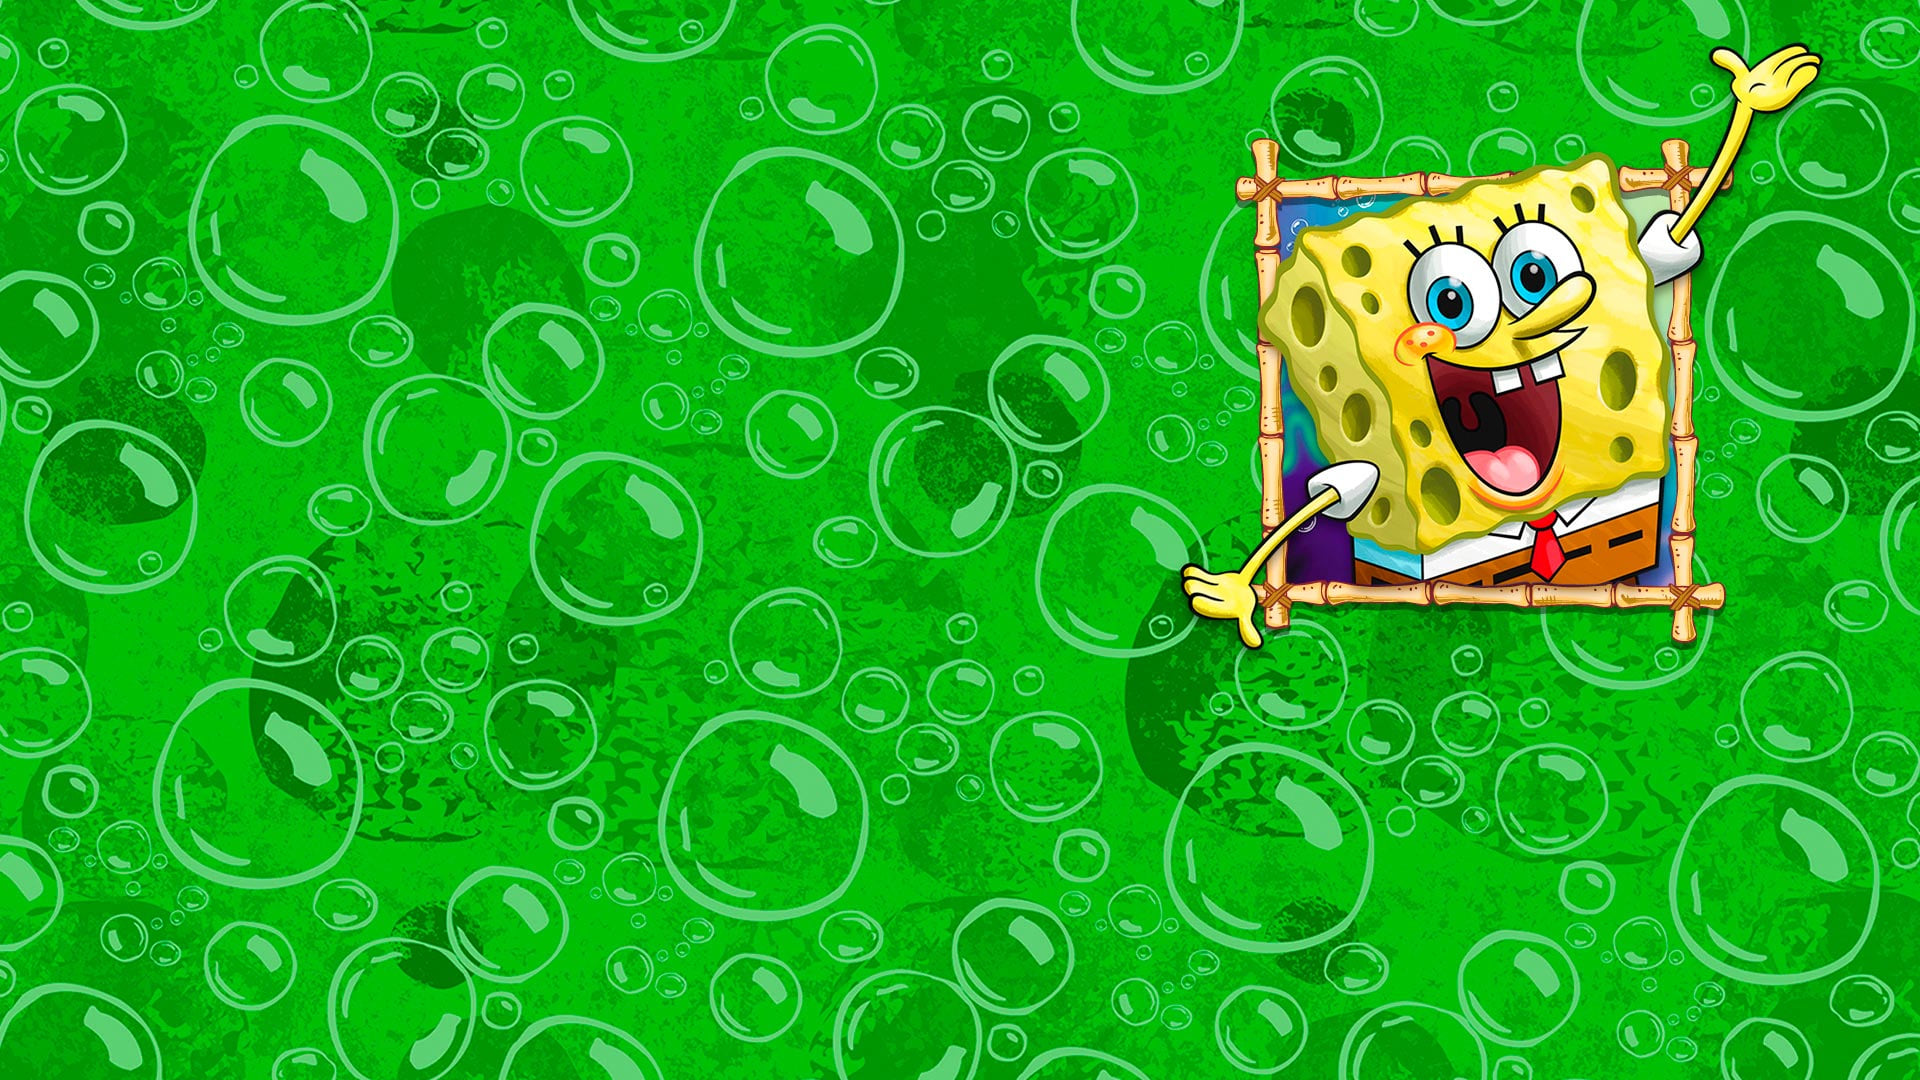 spongebob season 1 download